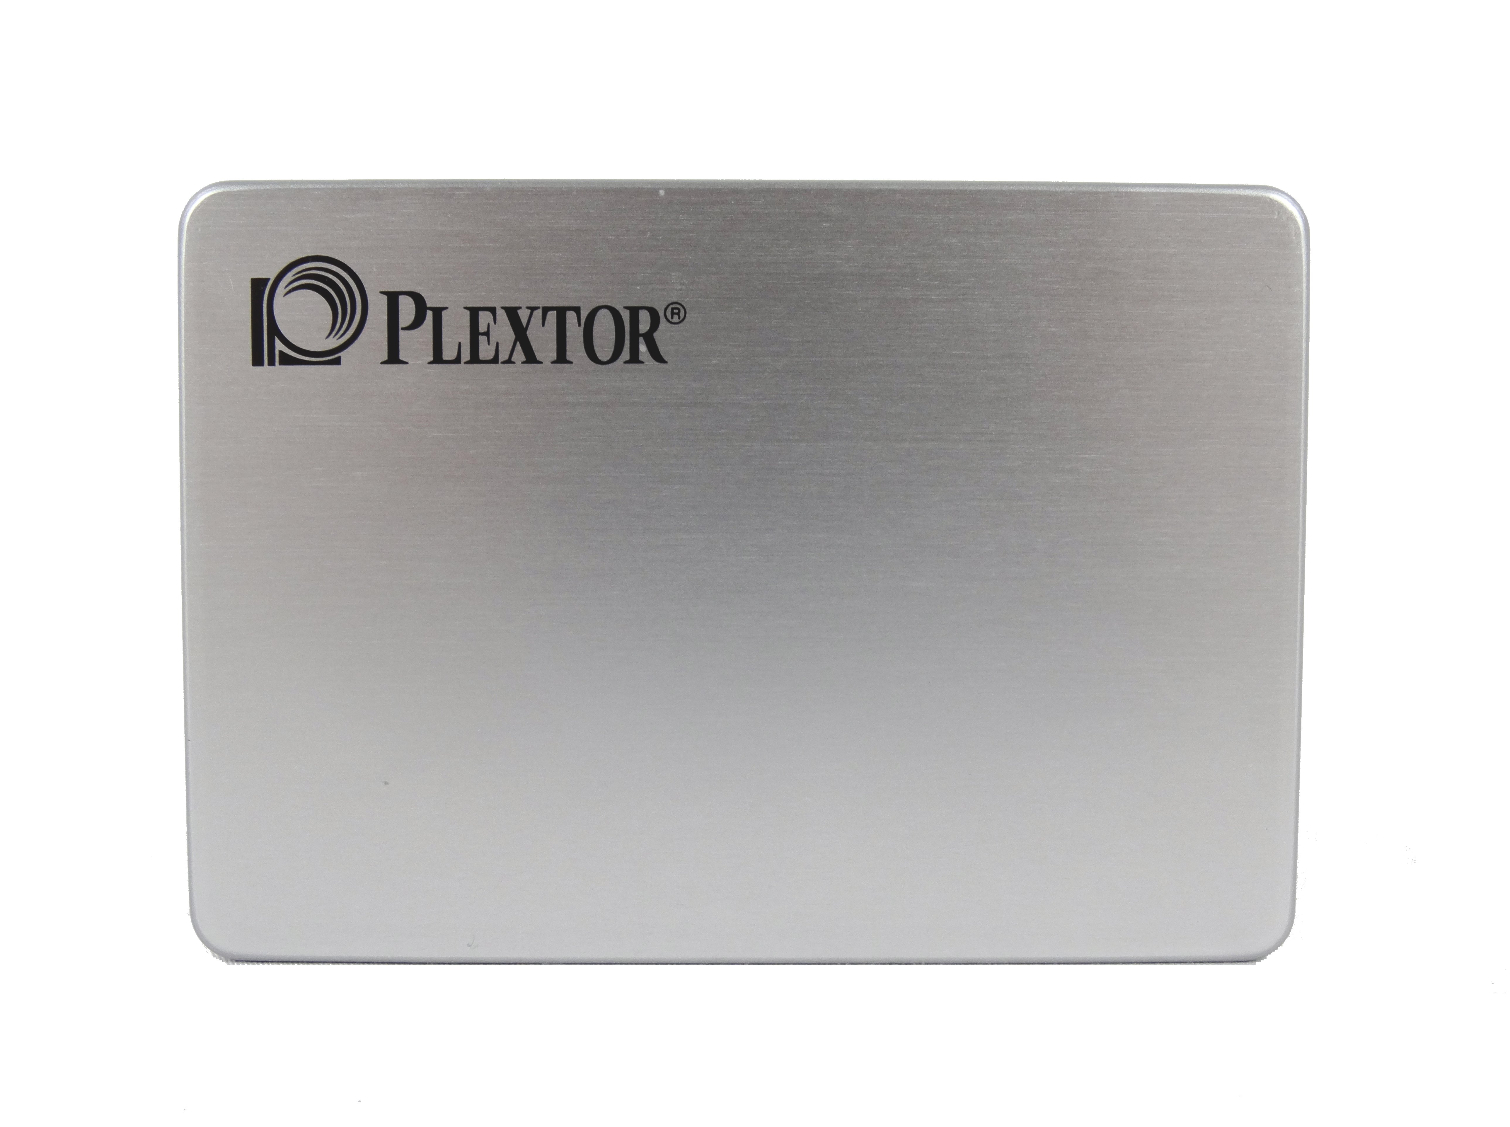 ssd plextor software